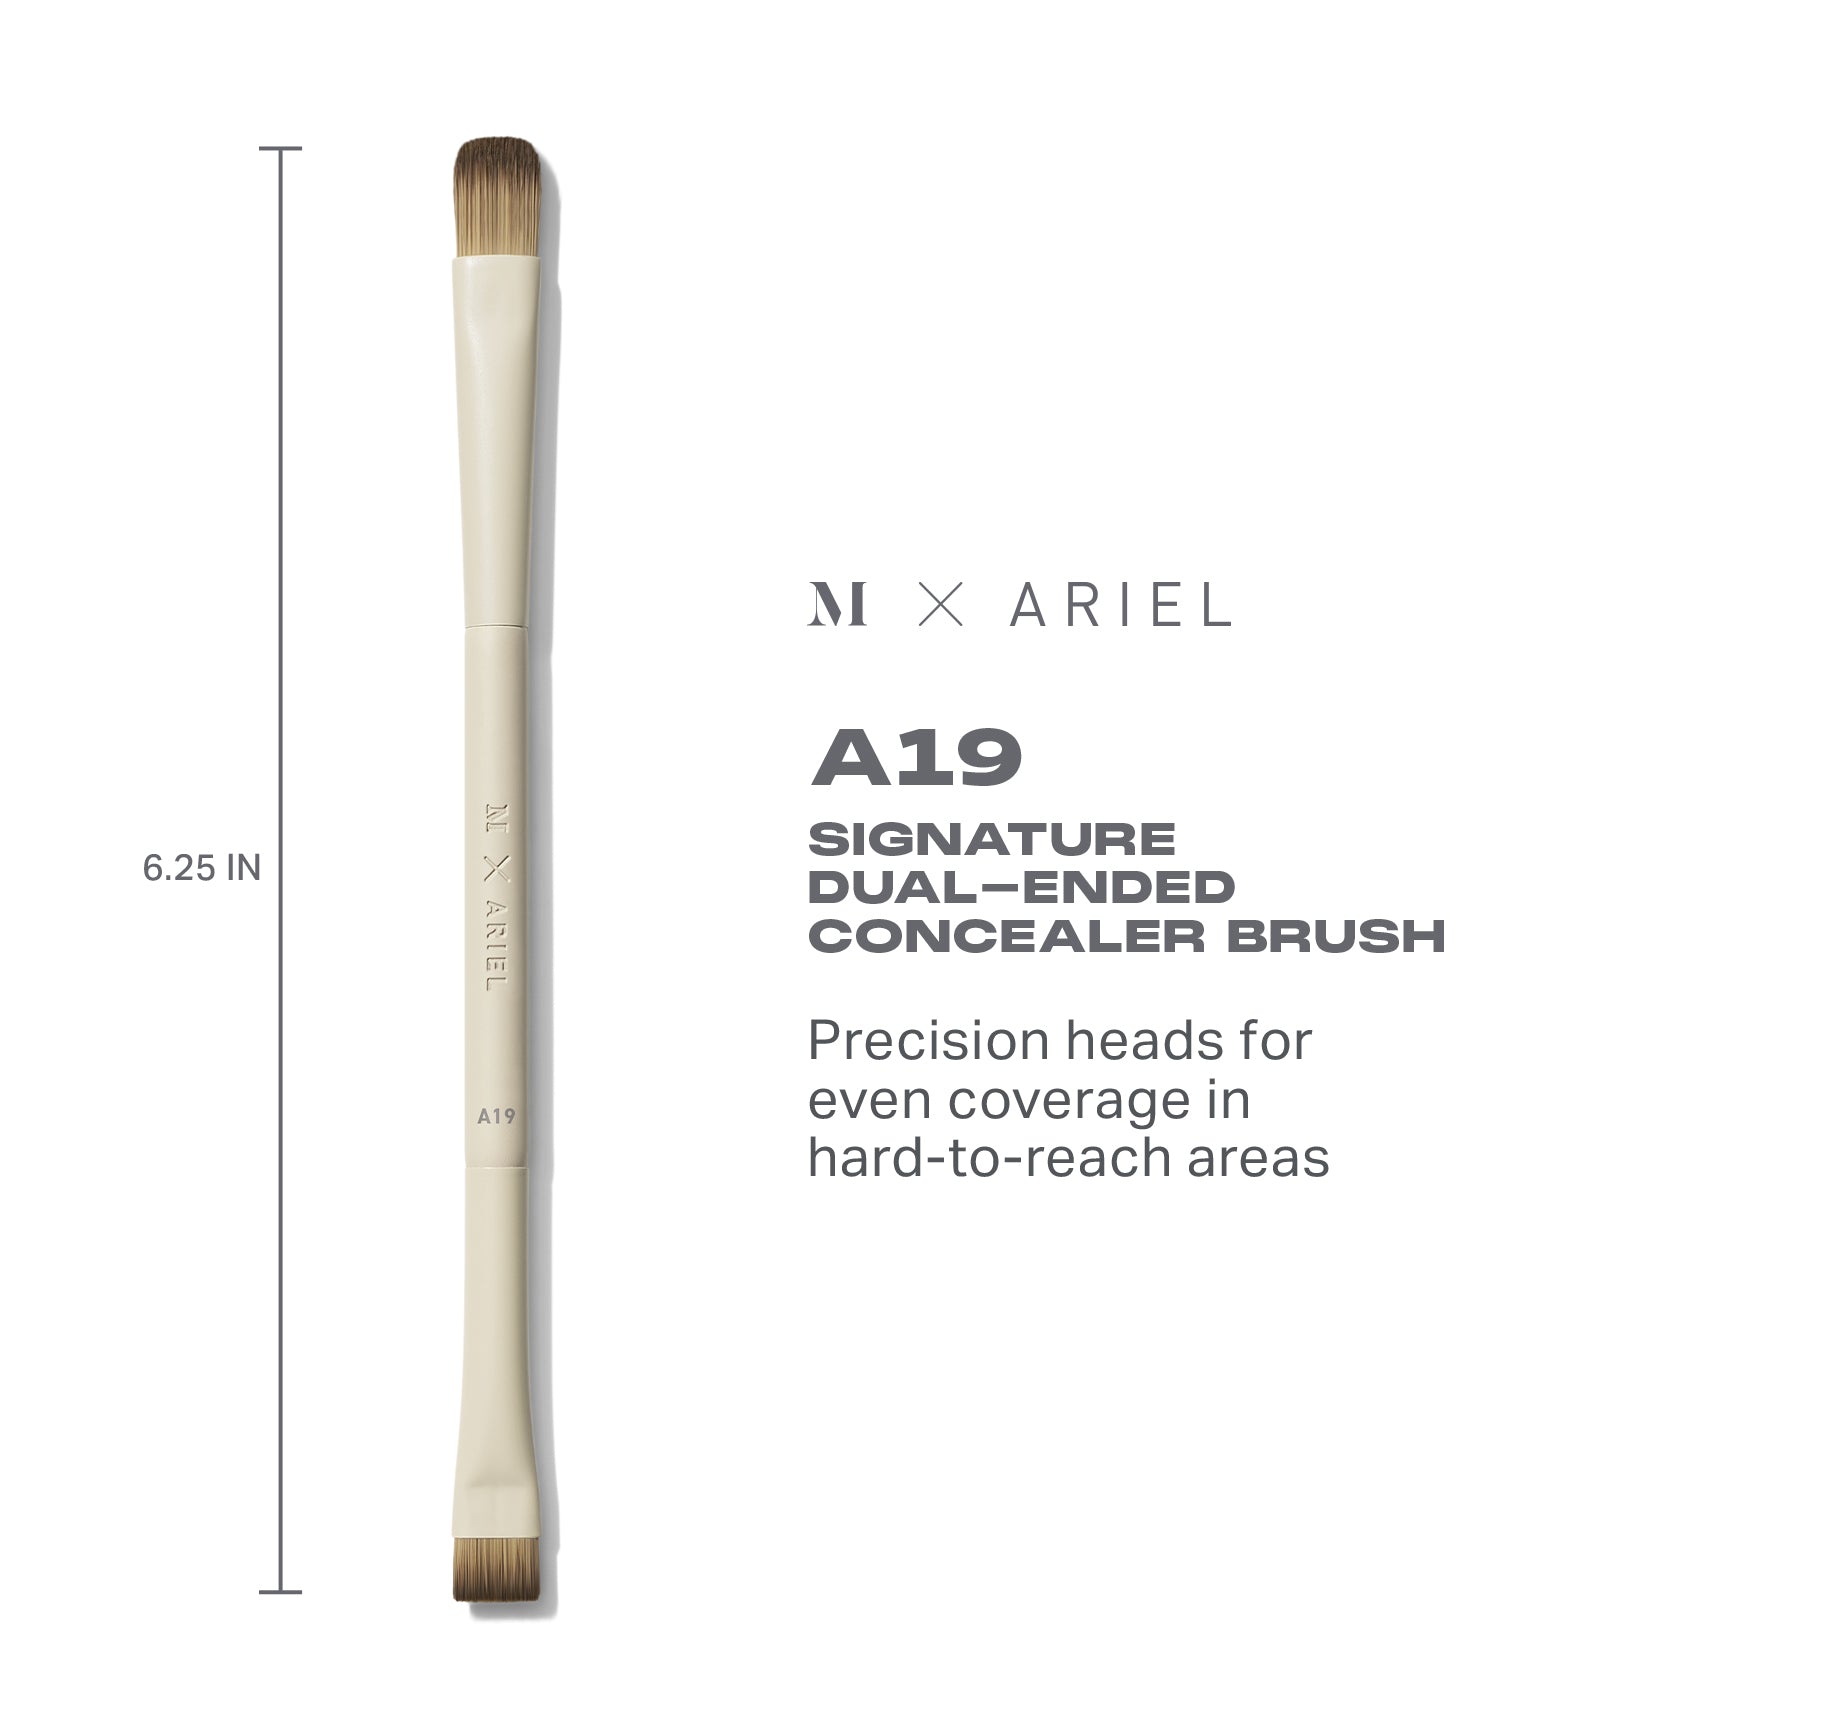 Morphe X Ariel A19 Dual-Ended Concealer Brush - Image 4